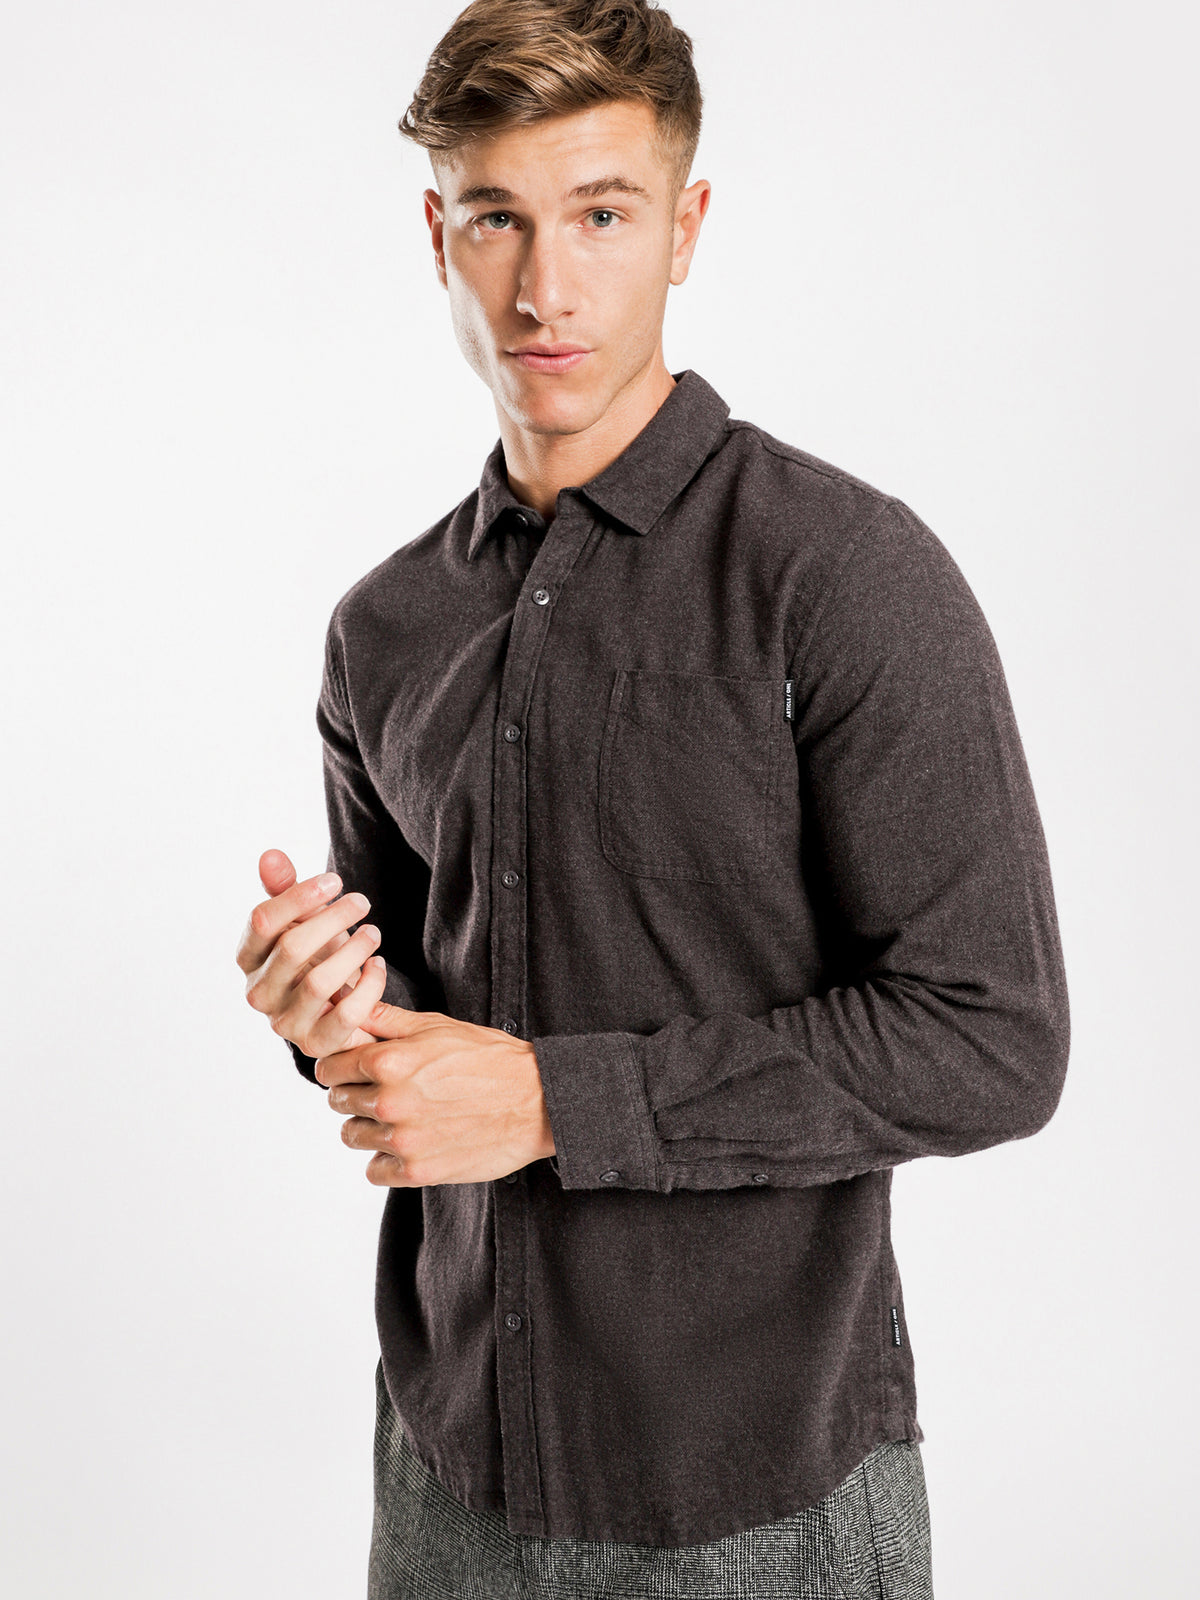 Ryker Flannel Long Sleeve Shirt in Charcoal